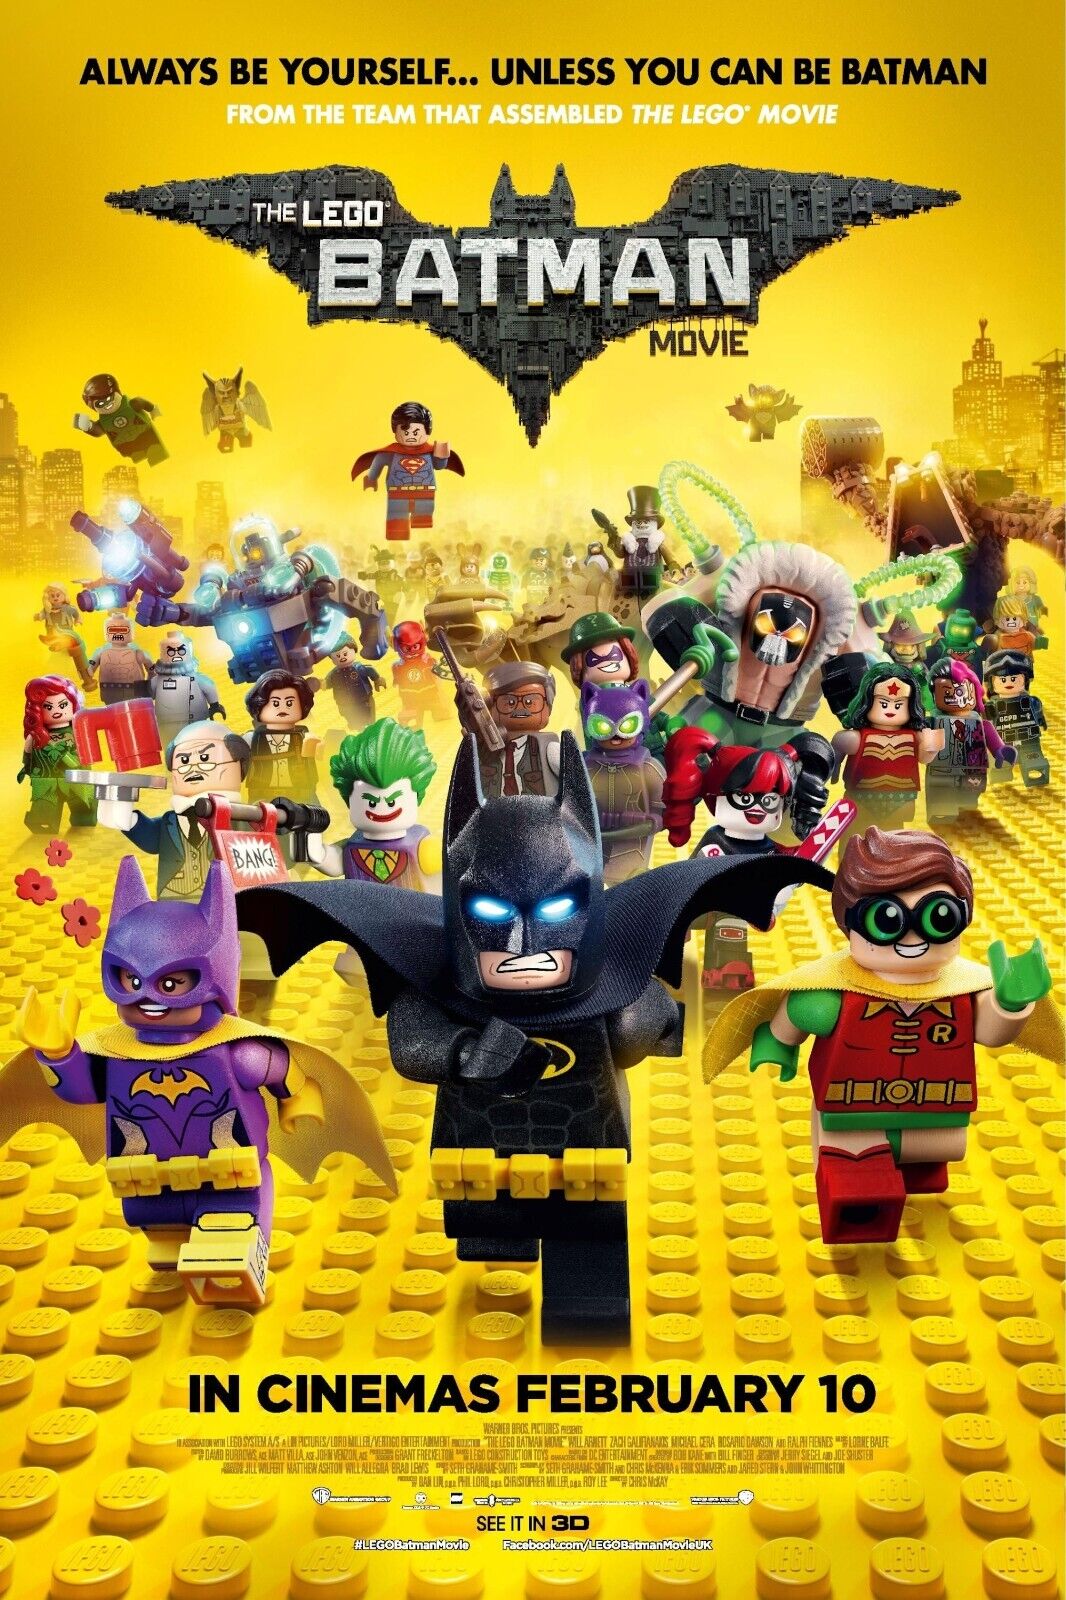 New Poster Revealed for LEGO Batman Movie